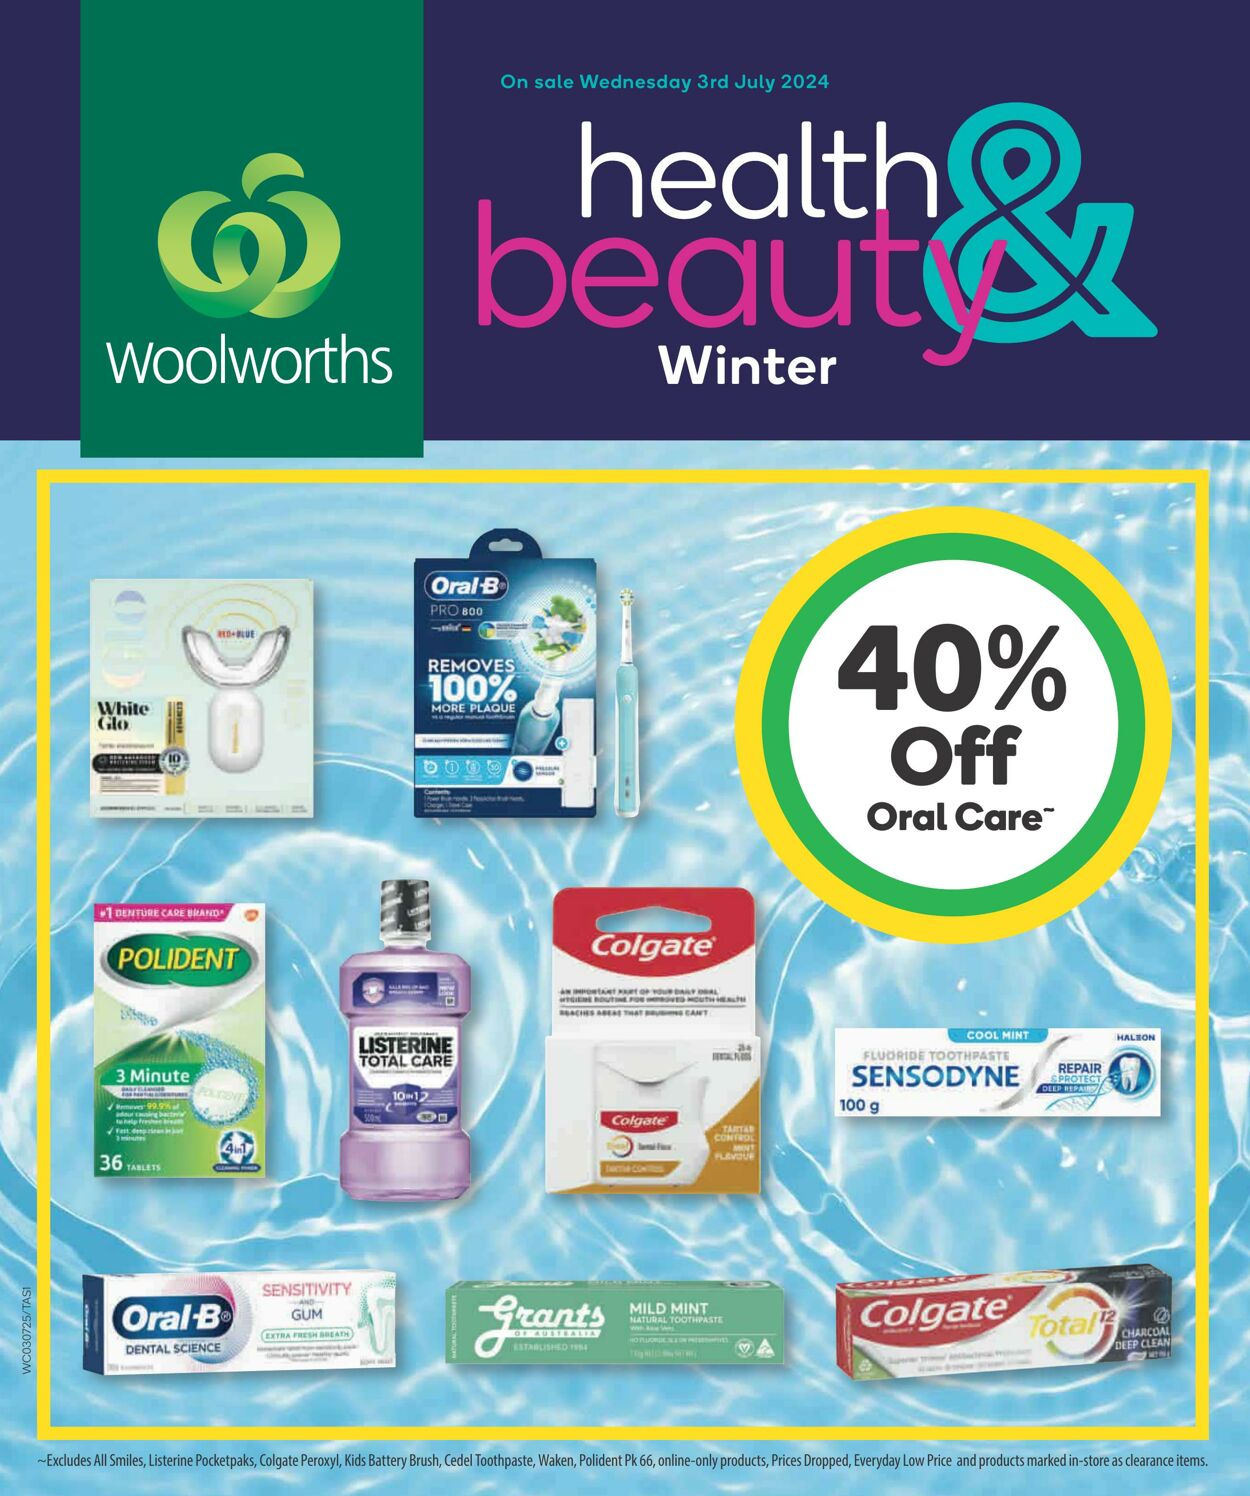 Catalogue Woolworths - Winter Health & Beauty Catalogue TAS 3 Jul, 2024 - 9 Jul, 2024